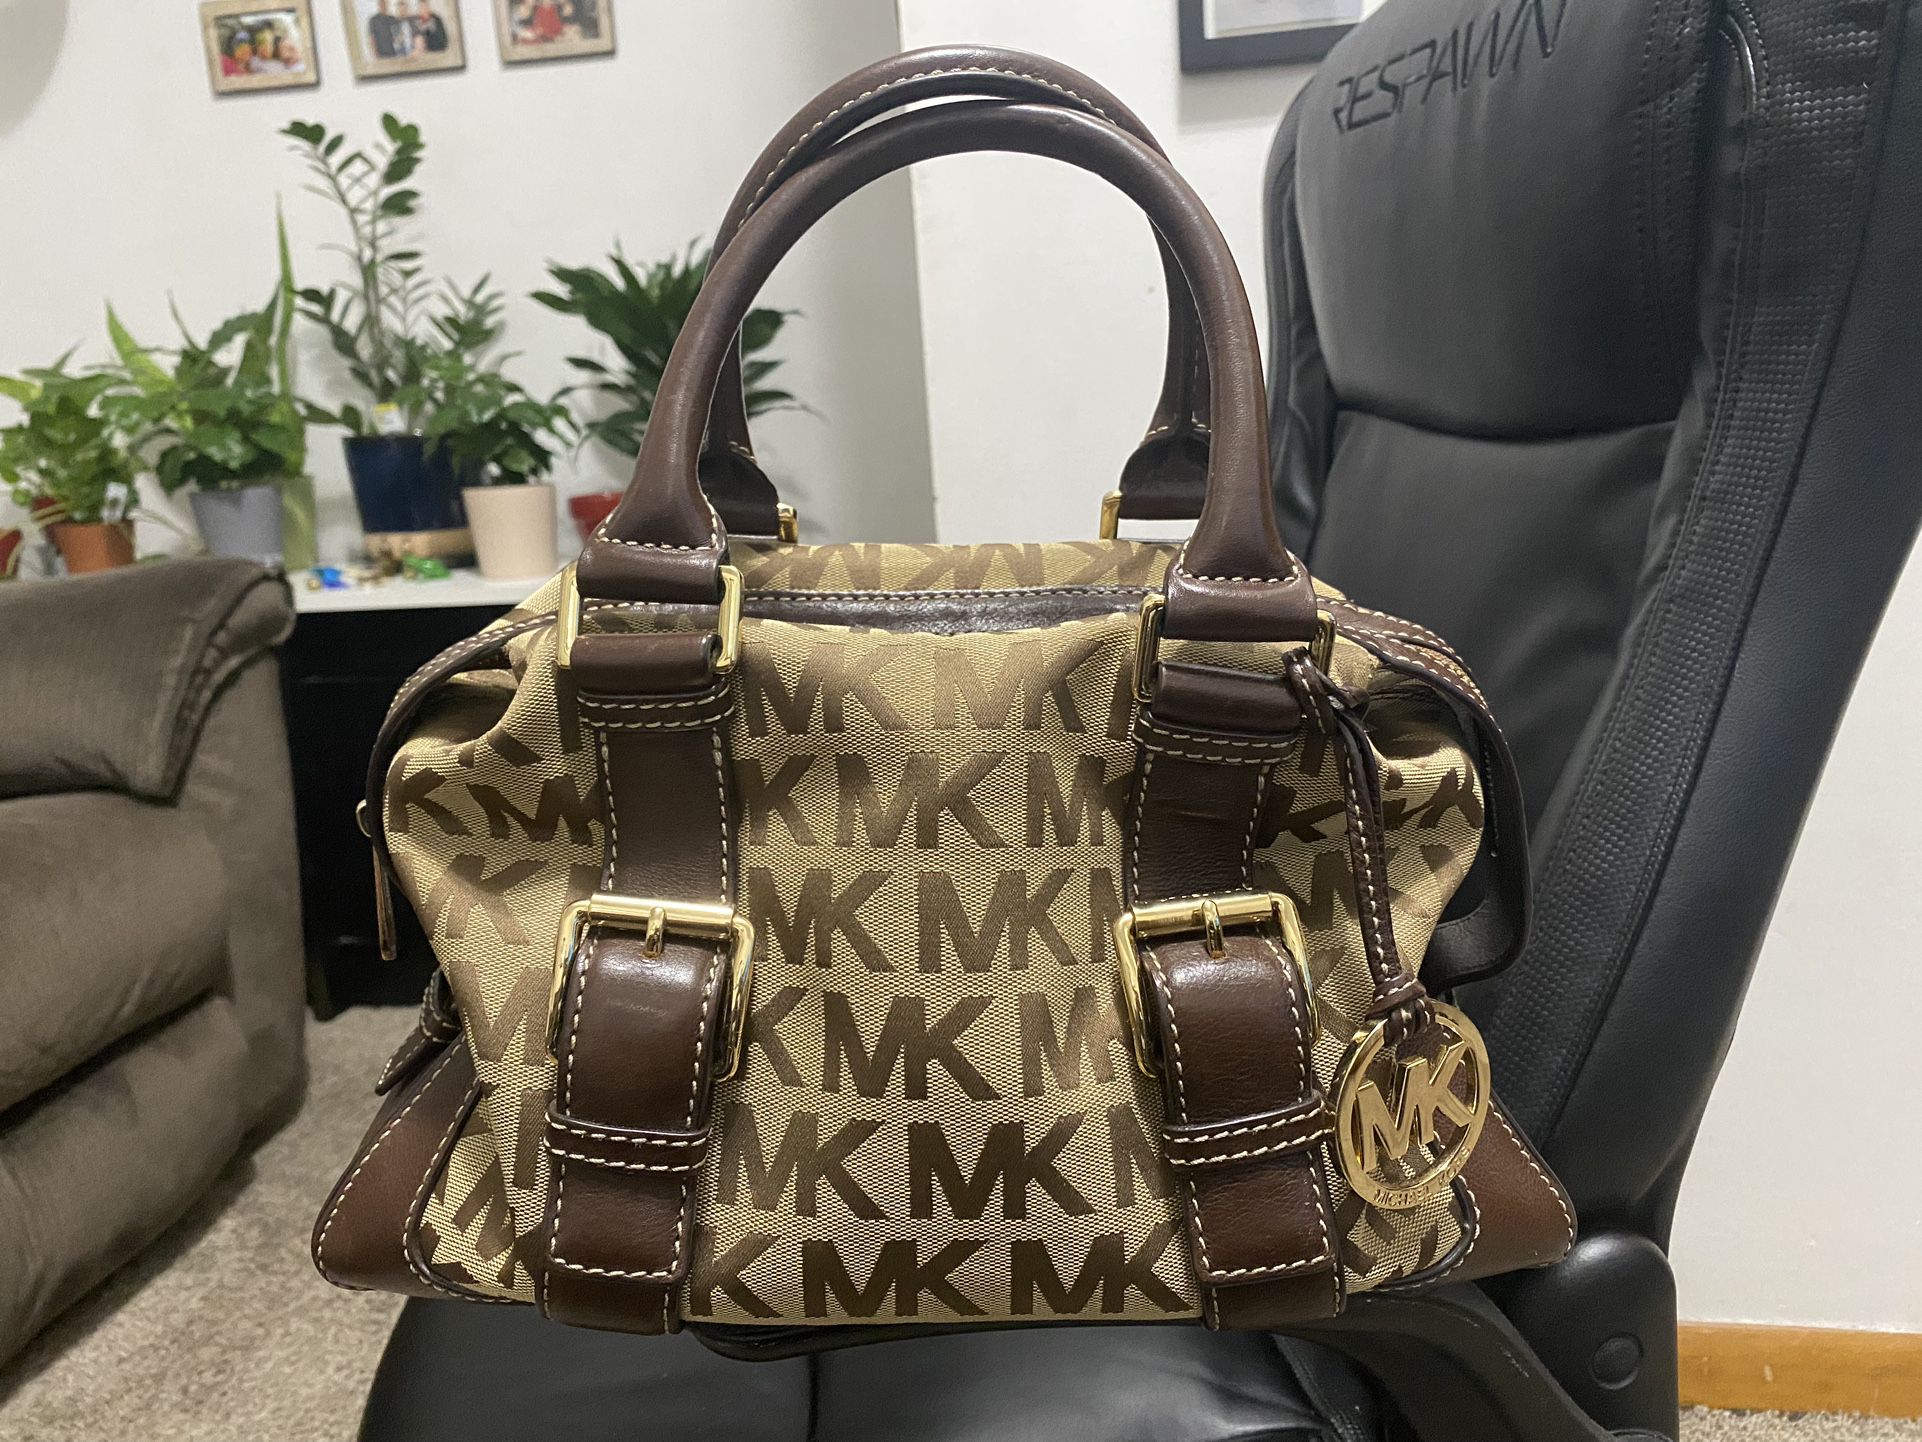 kors medium satchel